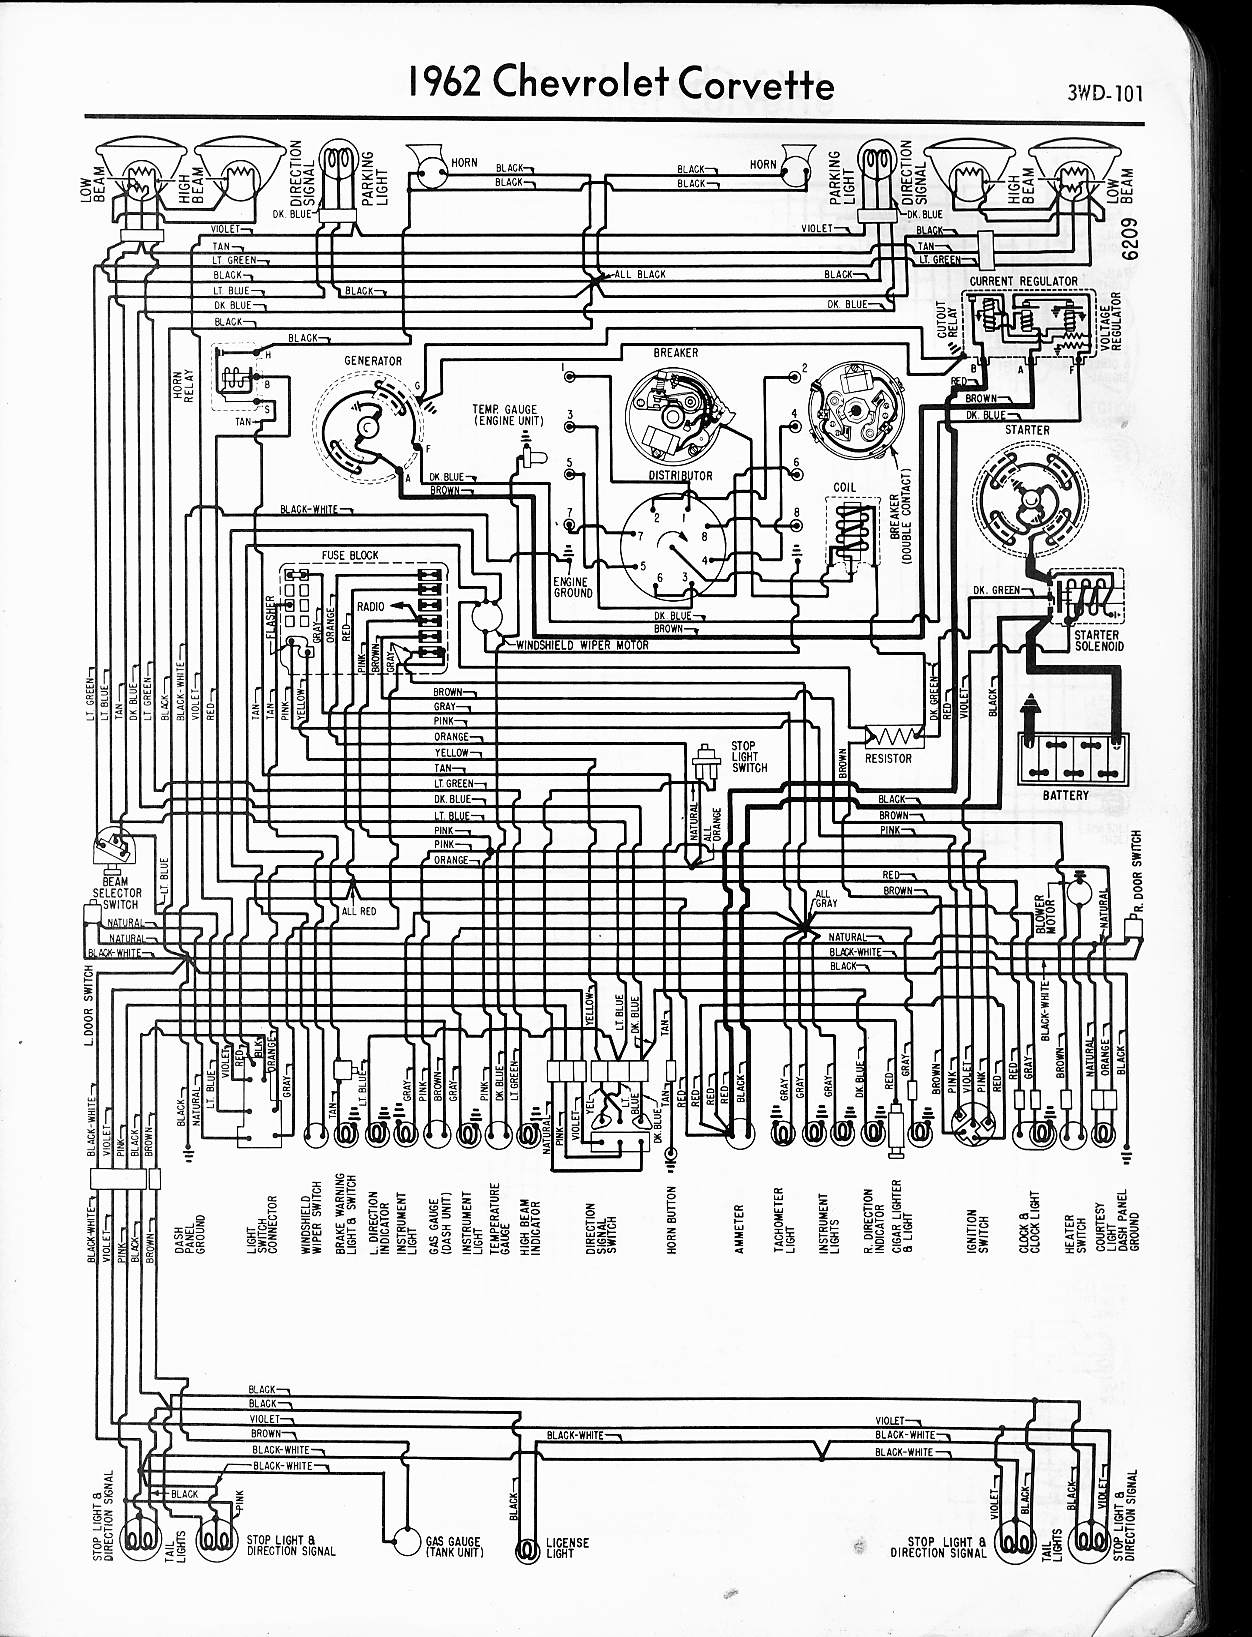 63 Chevy Impala Electrical Wiring Diagram Manual 1963 Car Manuals